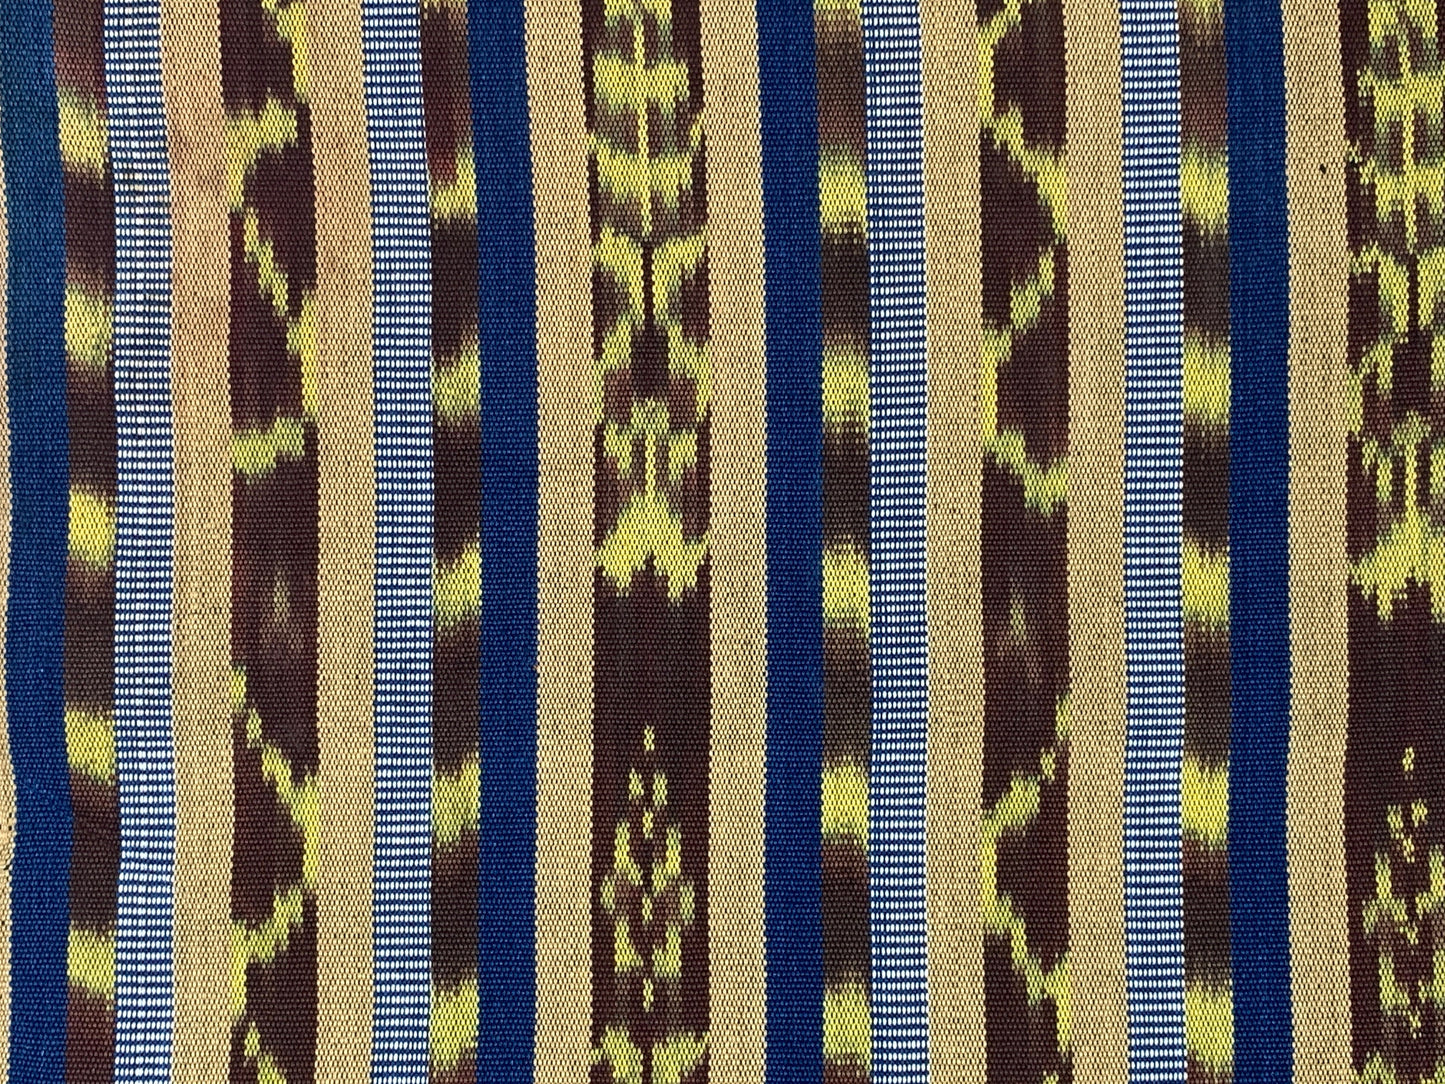 Guatemalan Handwoven Blue, Yellow, Brown and Tan Ikat